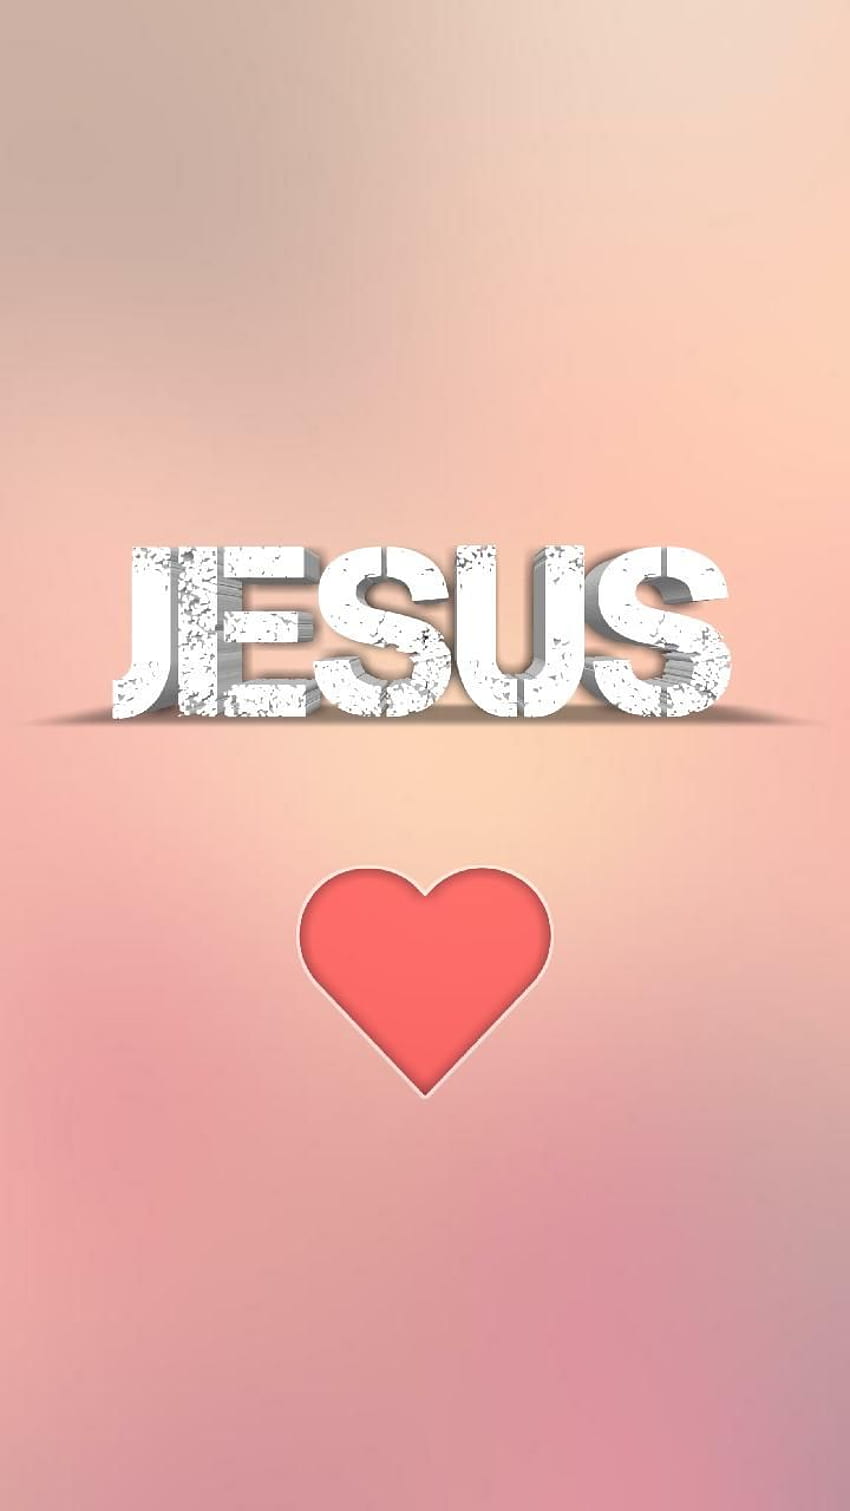 Jesus Love Pictures  Download Free Images on Unsplash